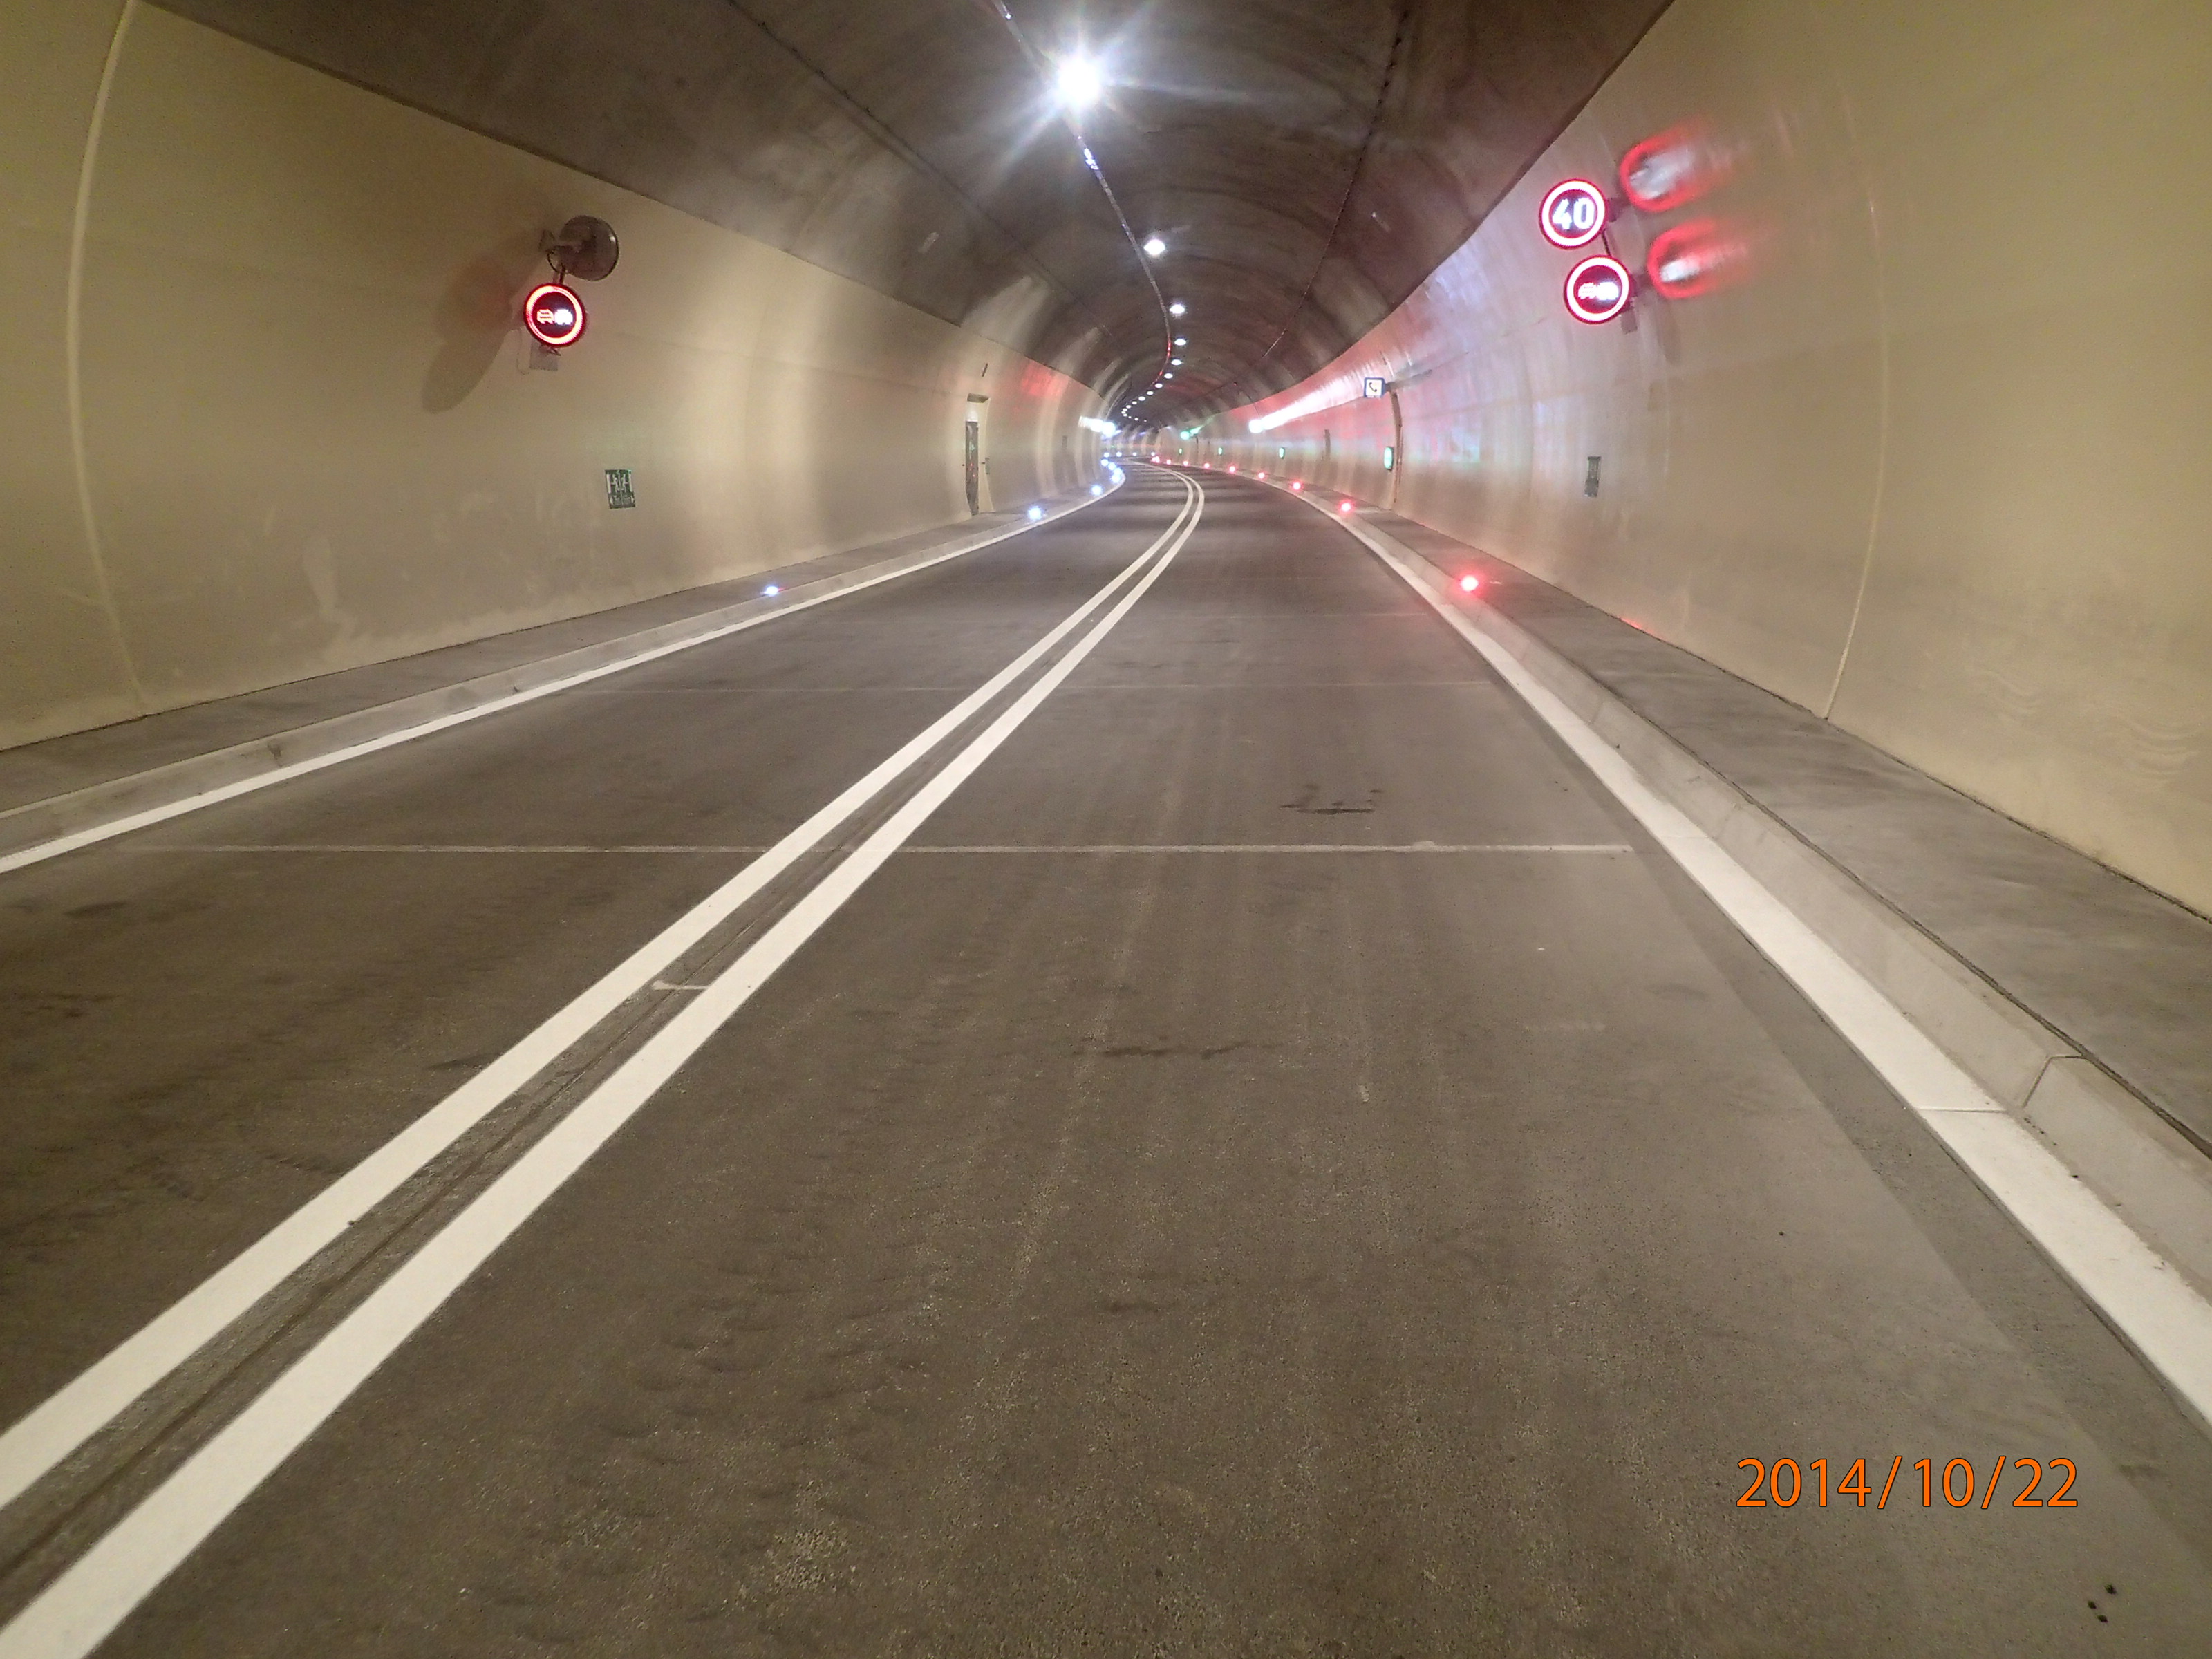 S10 Tunnel Neumarkt - Tunnel construction